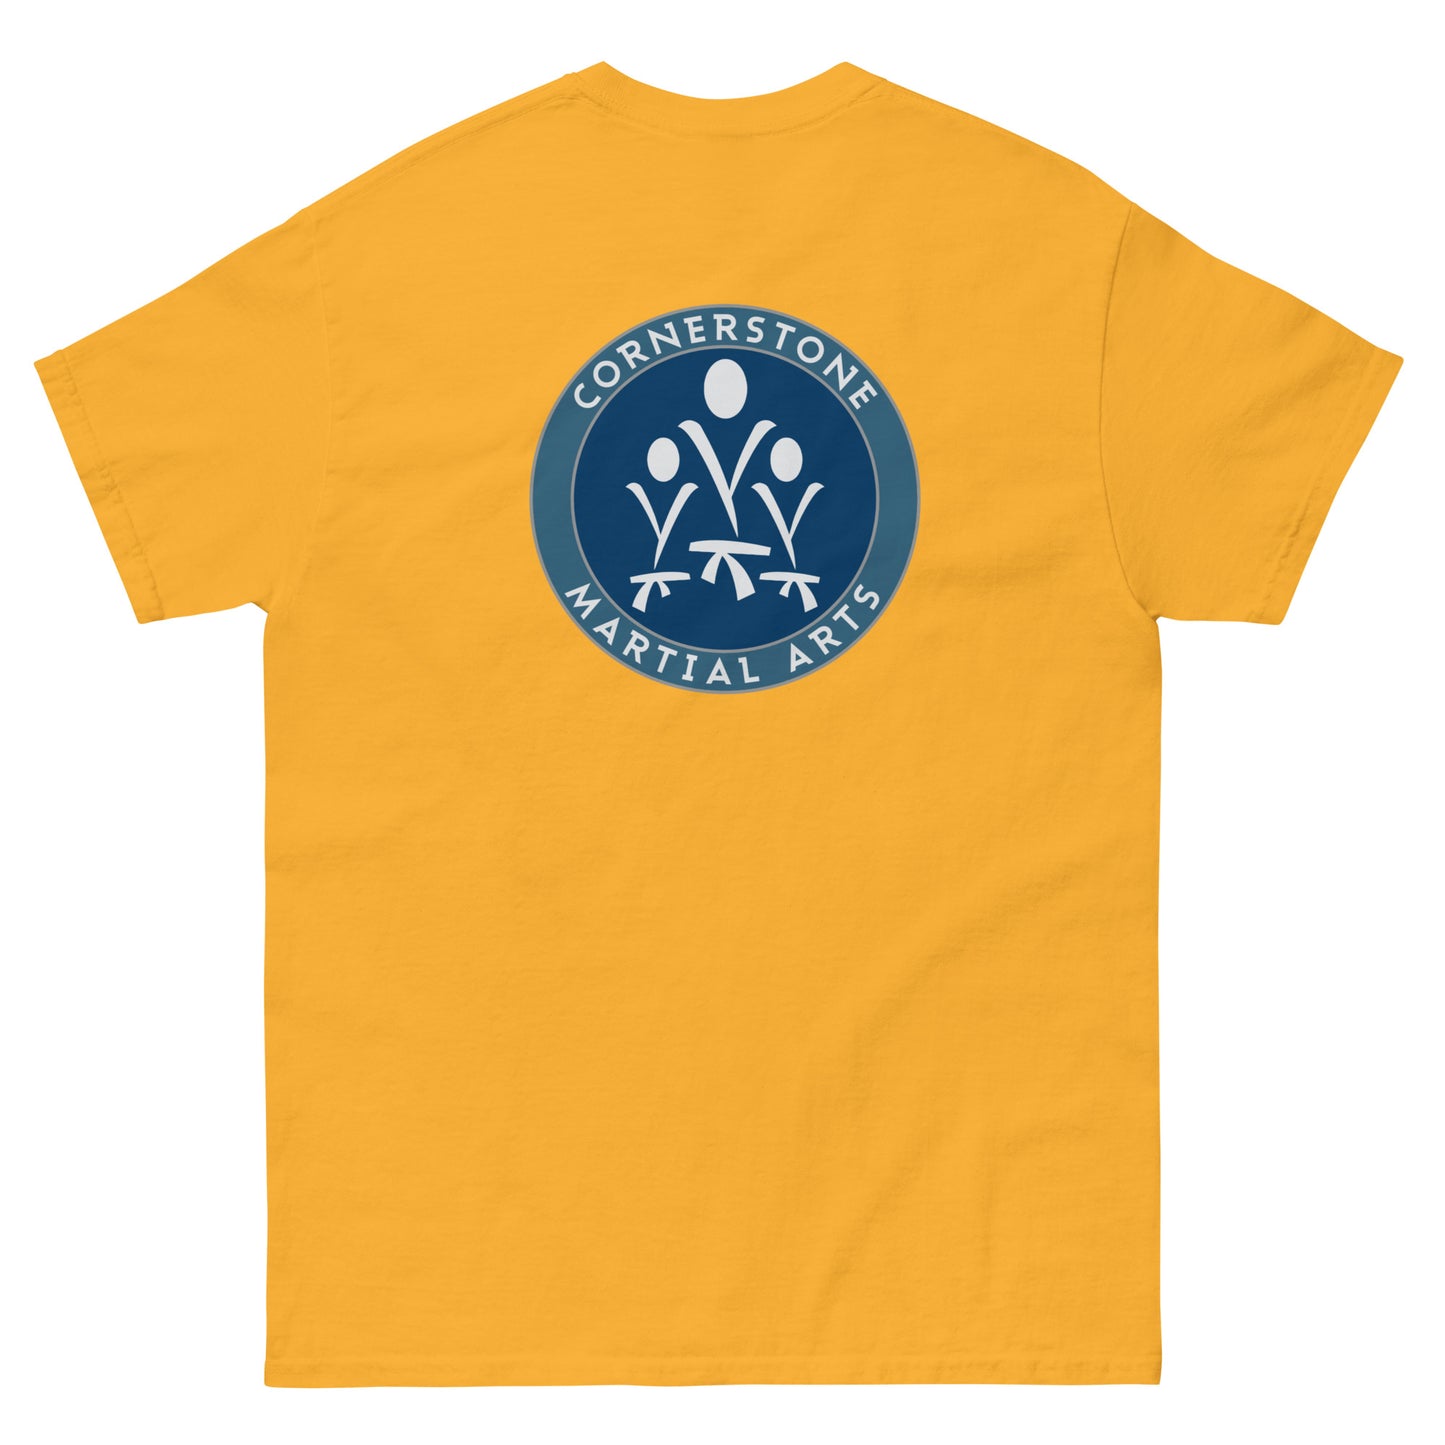 Yellow Belt Unisex Cotton T-Shirt